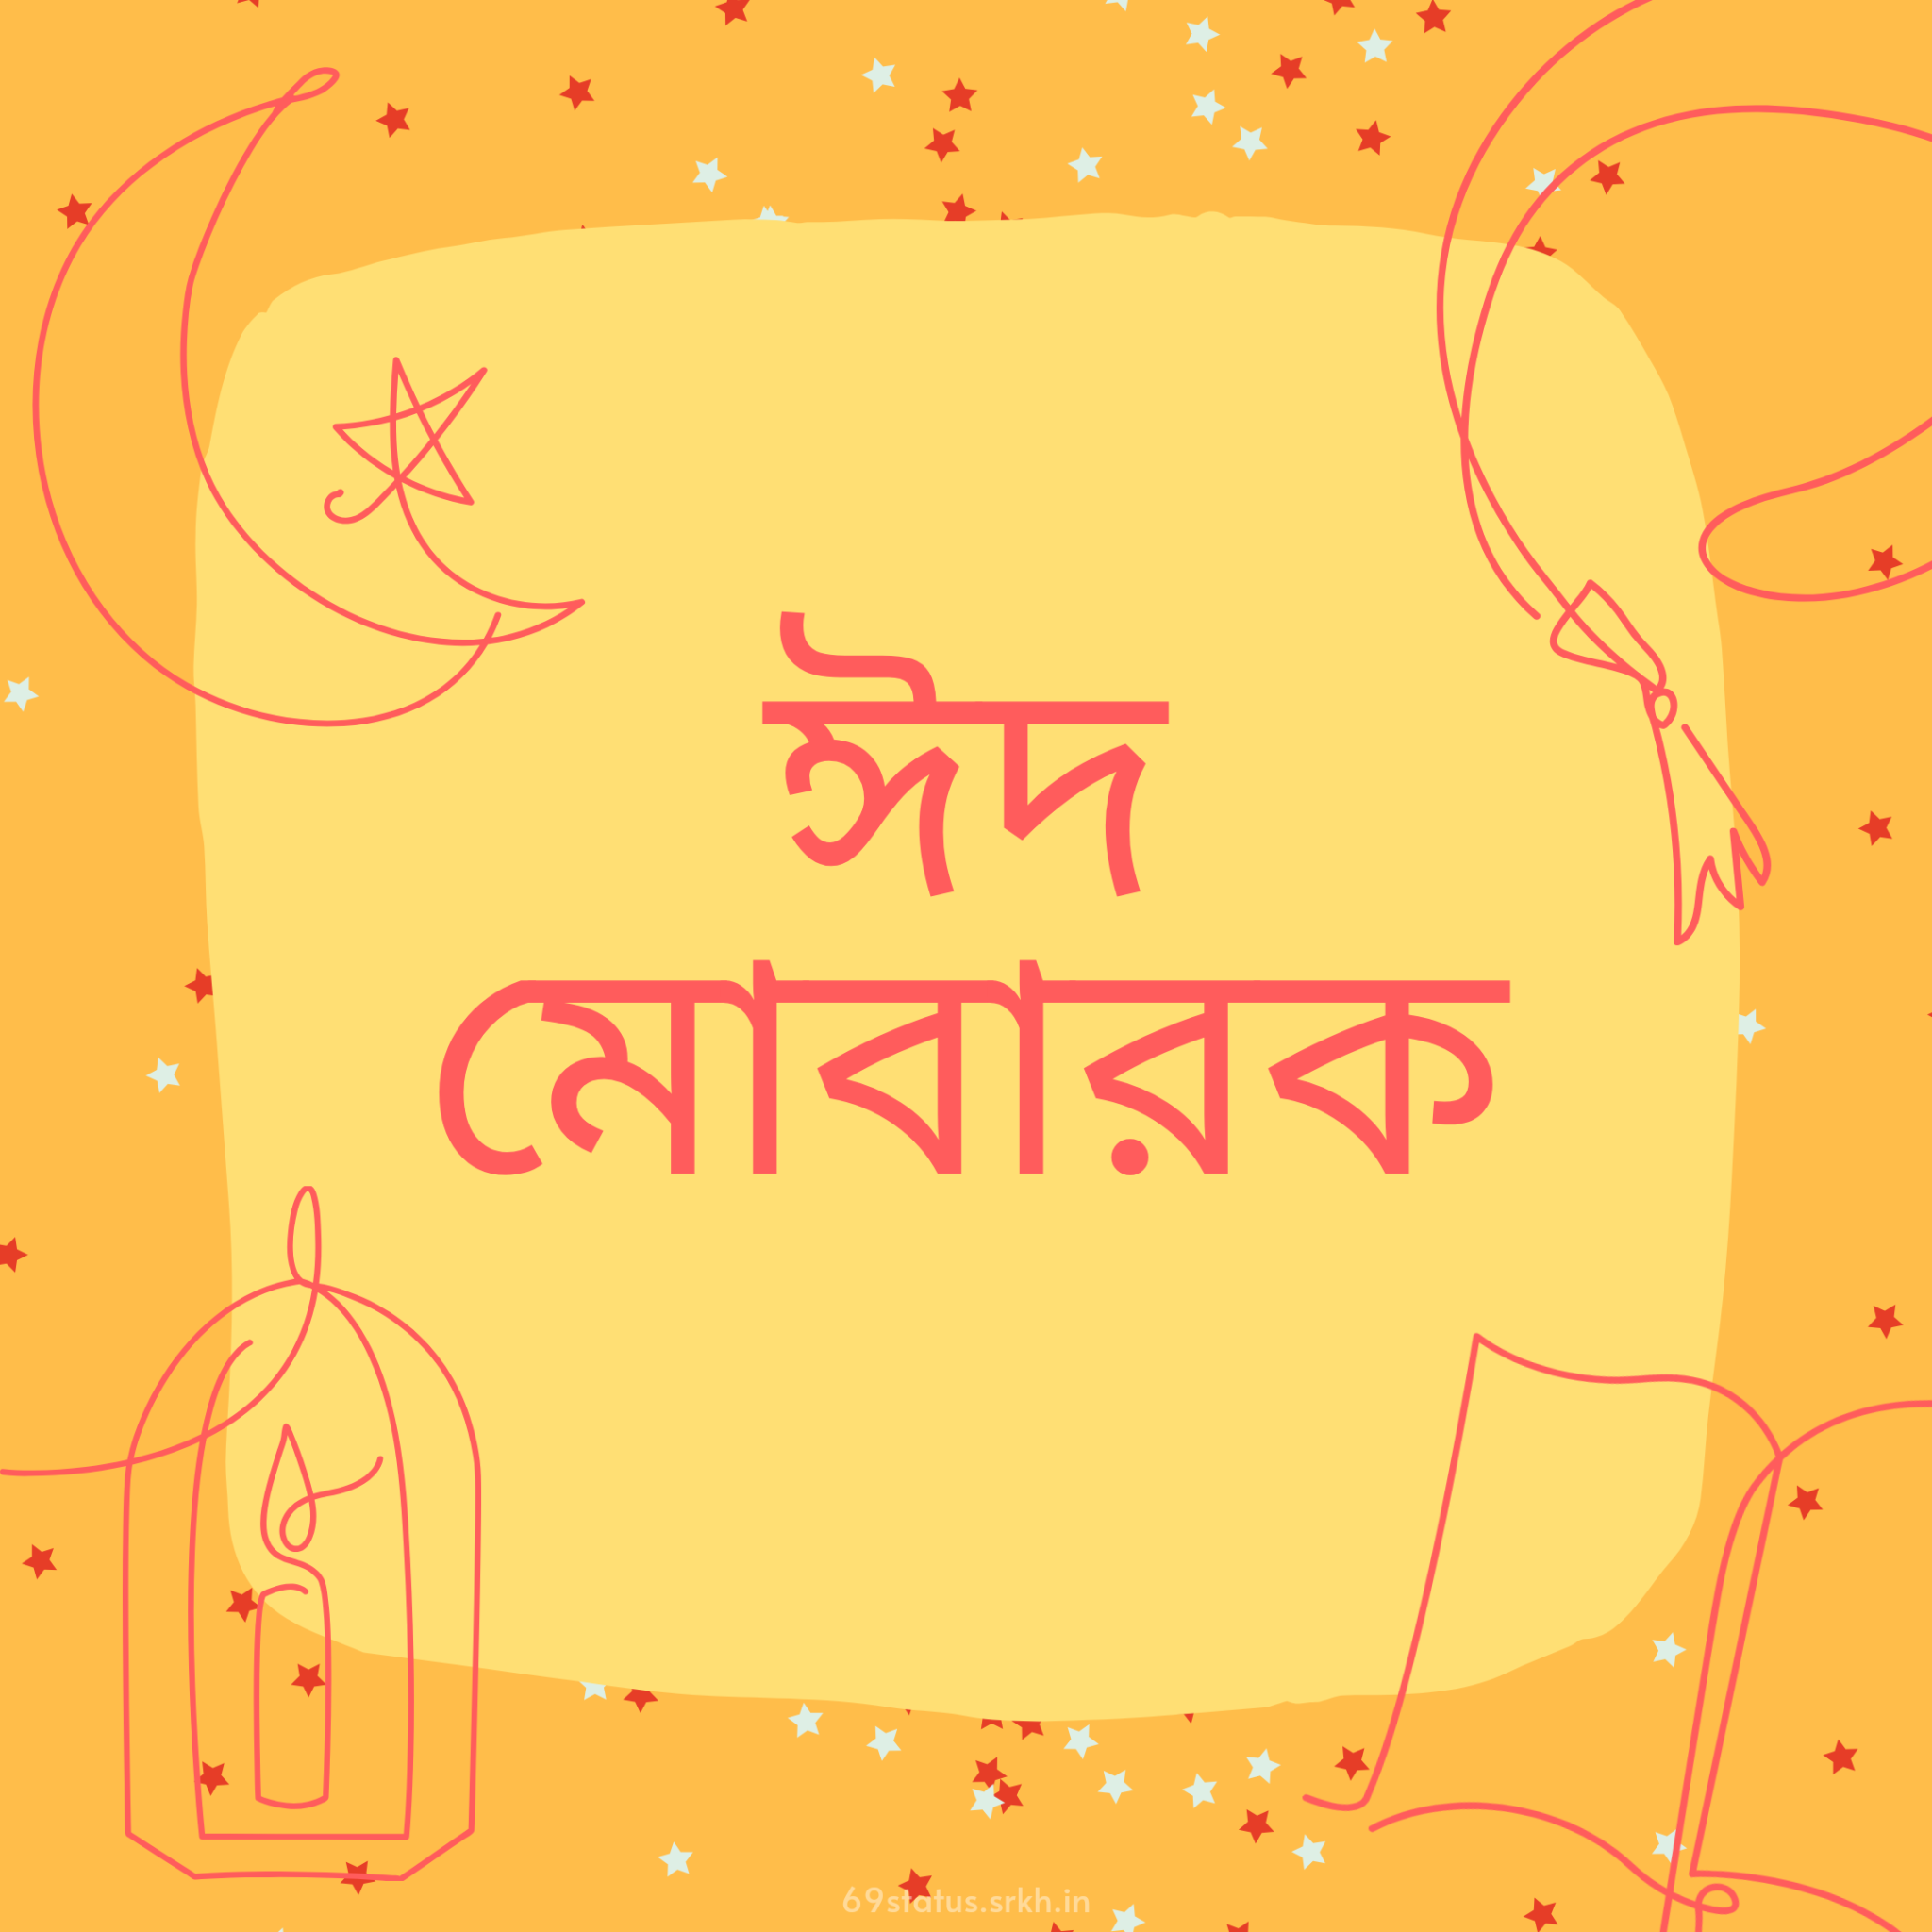 Bengali Eid Mubarak images hd